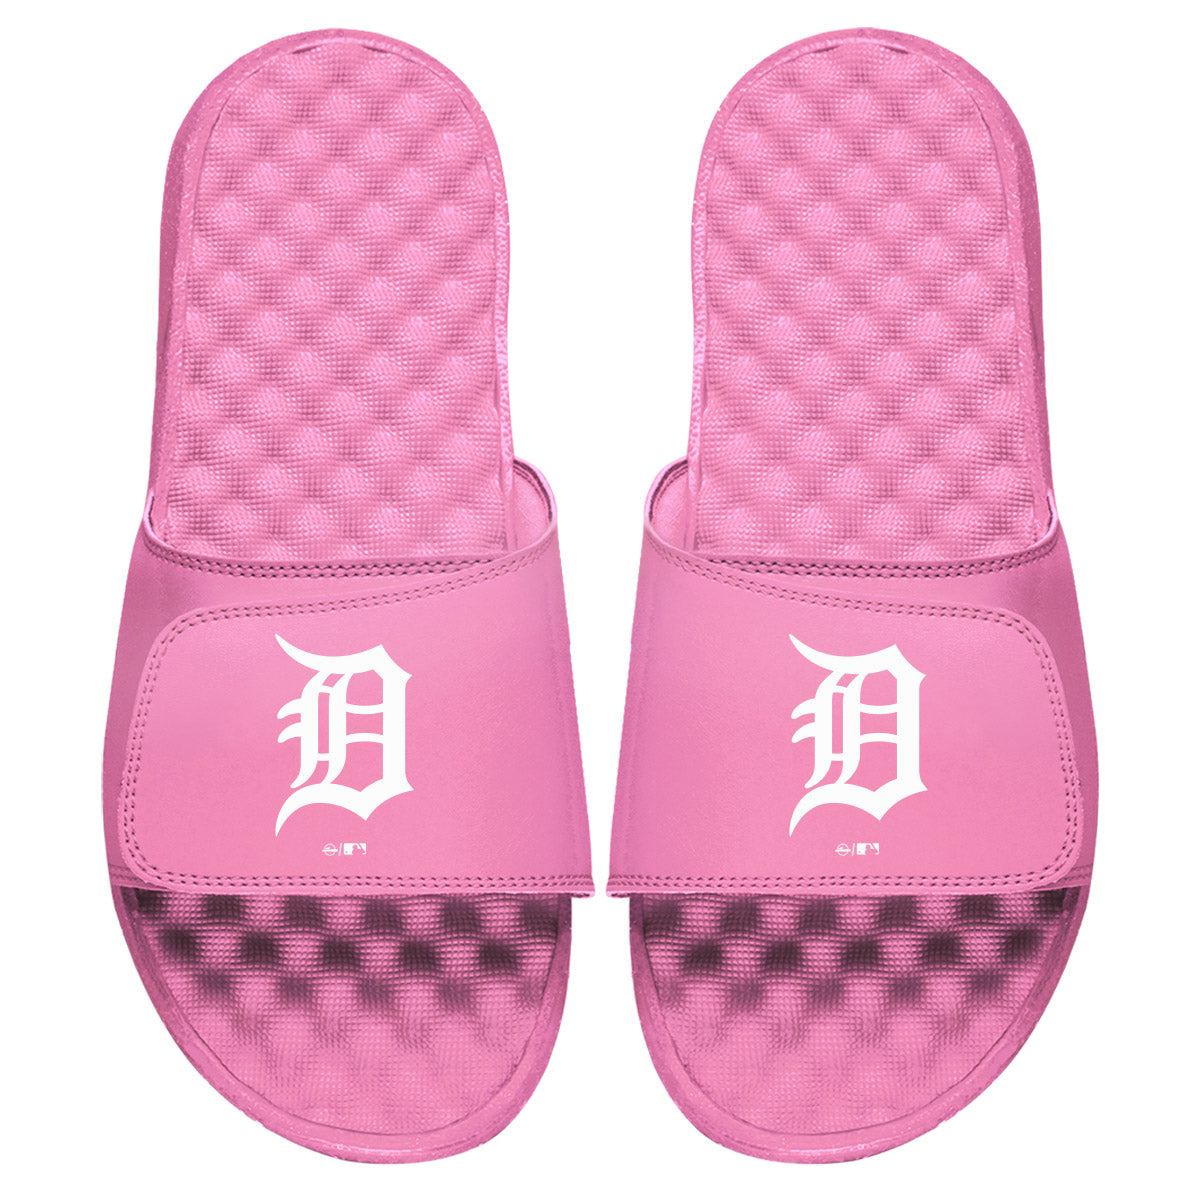 Detroit Tigers Primary Pink Slides